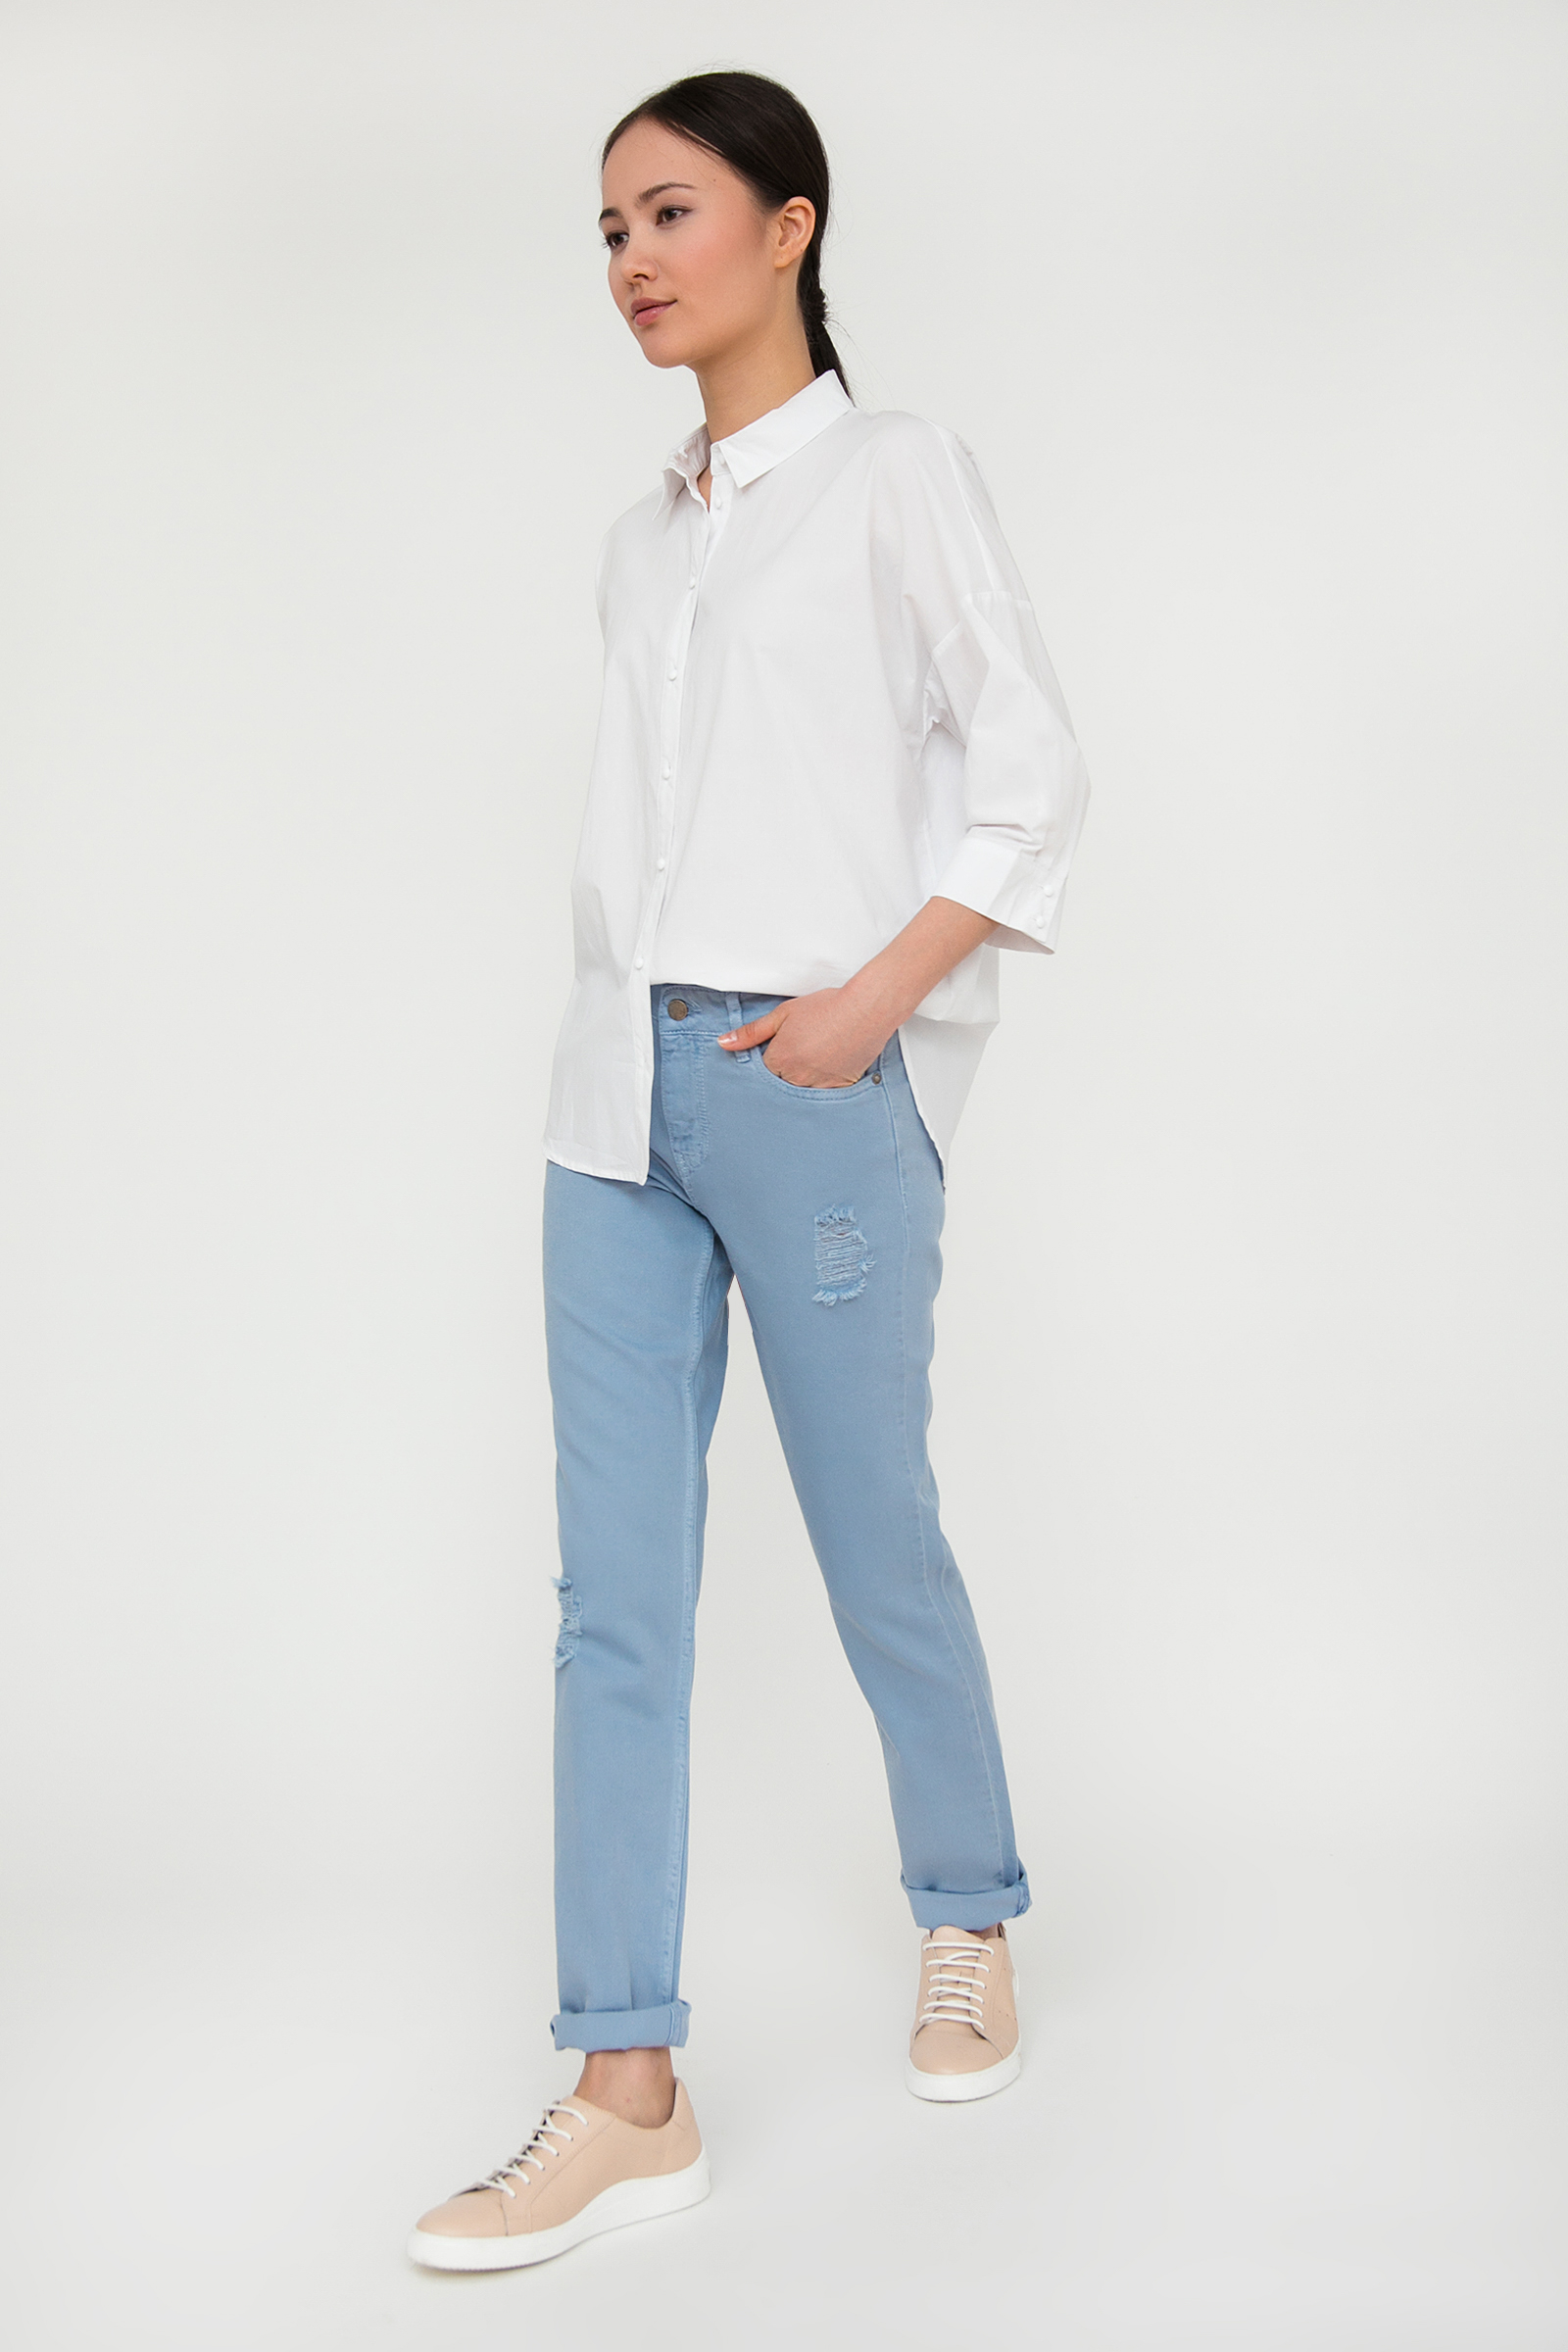 Брюки женские (джинсы) Finn-Flare белый S20-15024 